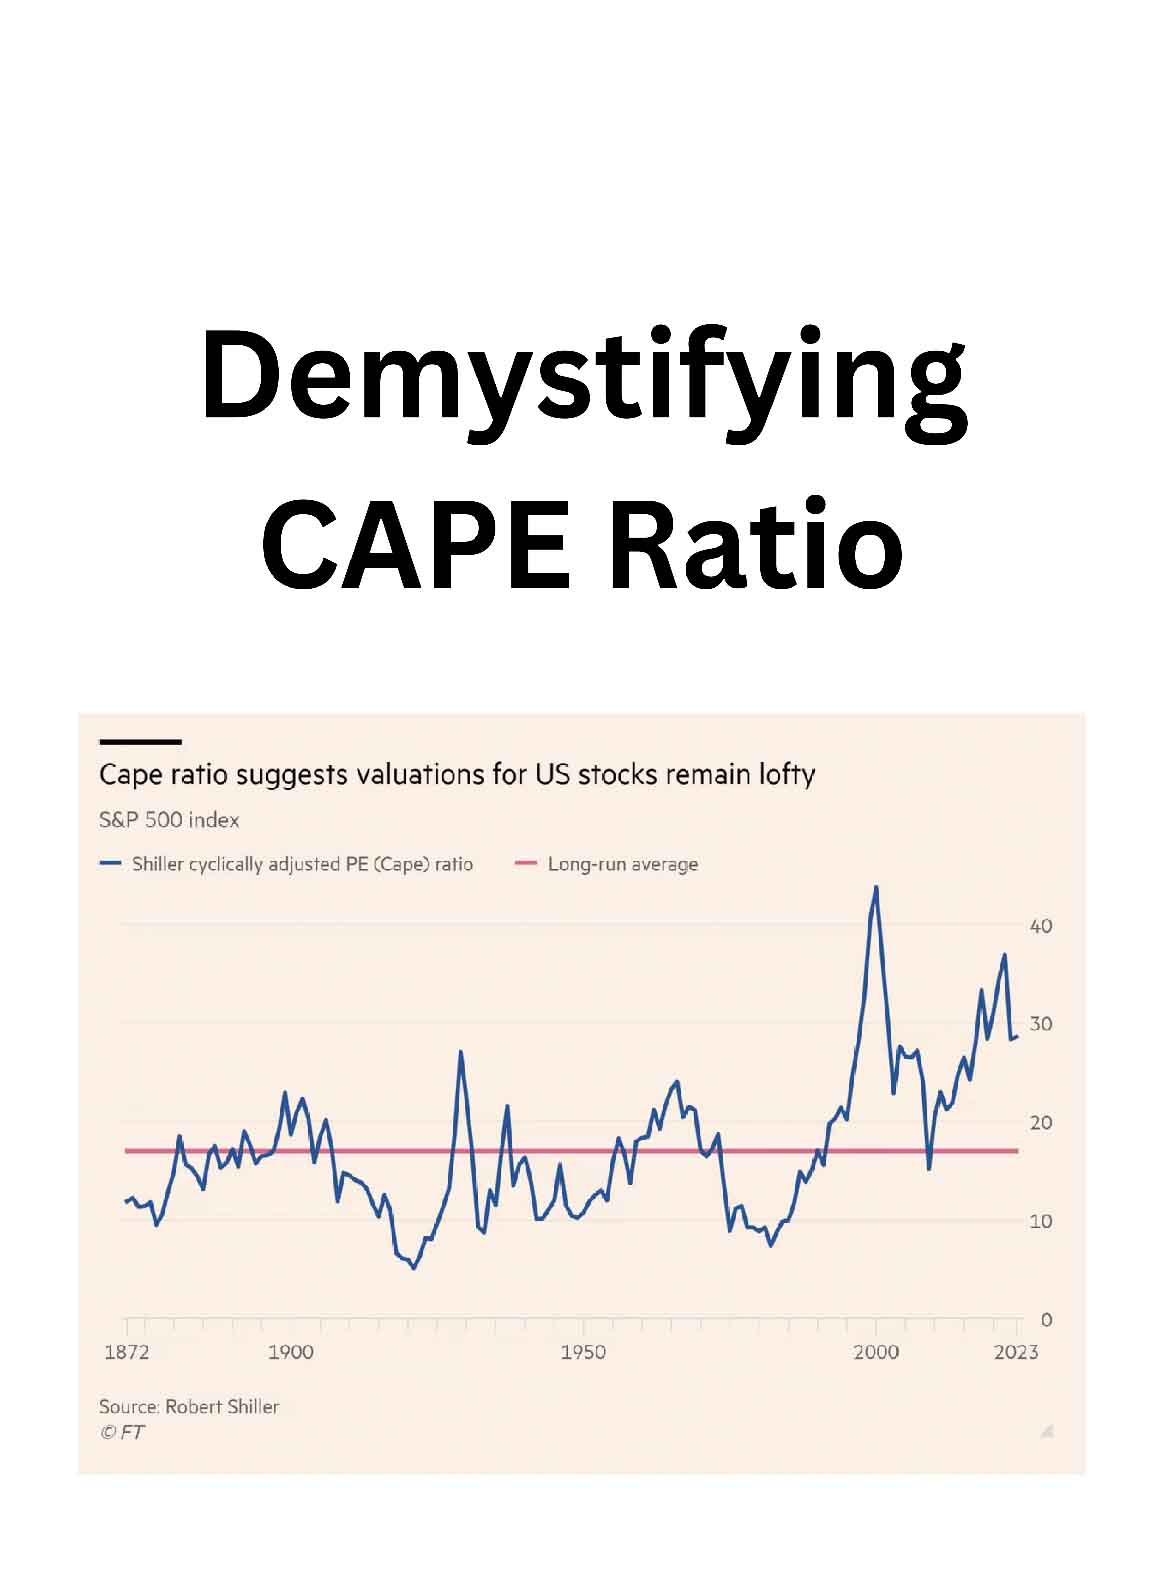 Demystifying CAPE Ratio